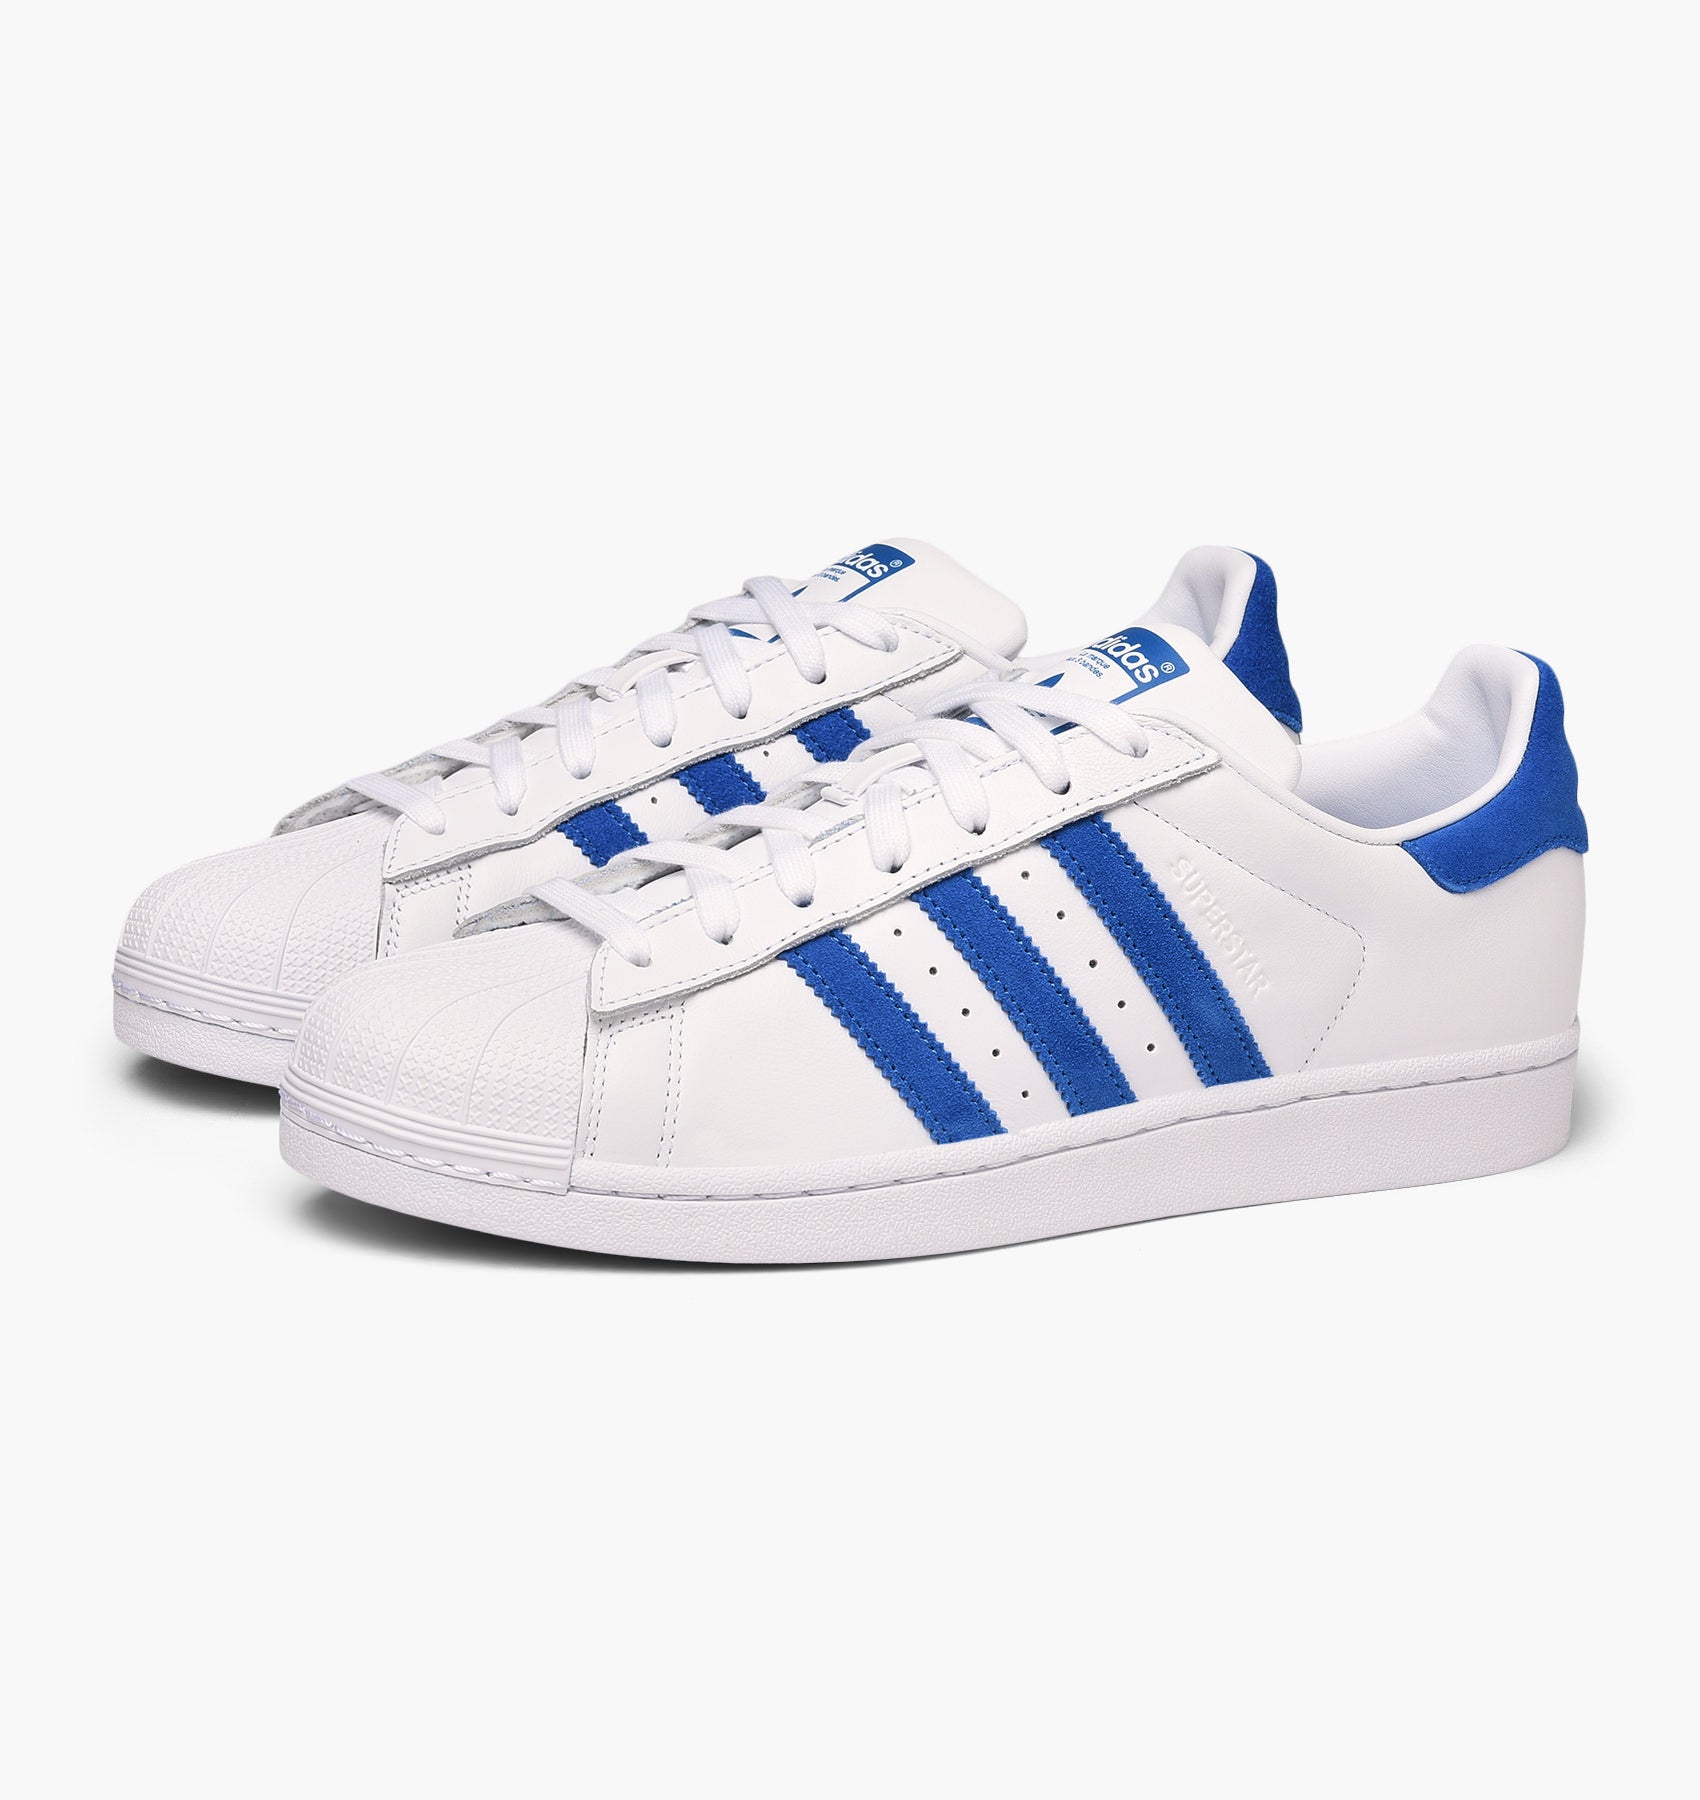 Adidas Originals Superstar EE4474 - Both Shoes